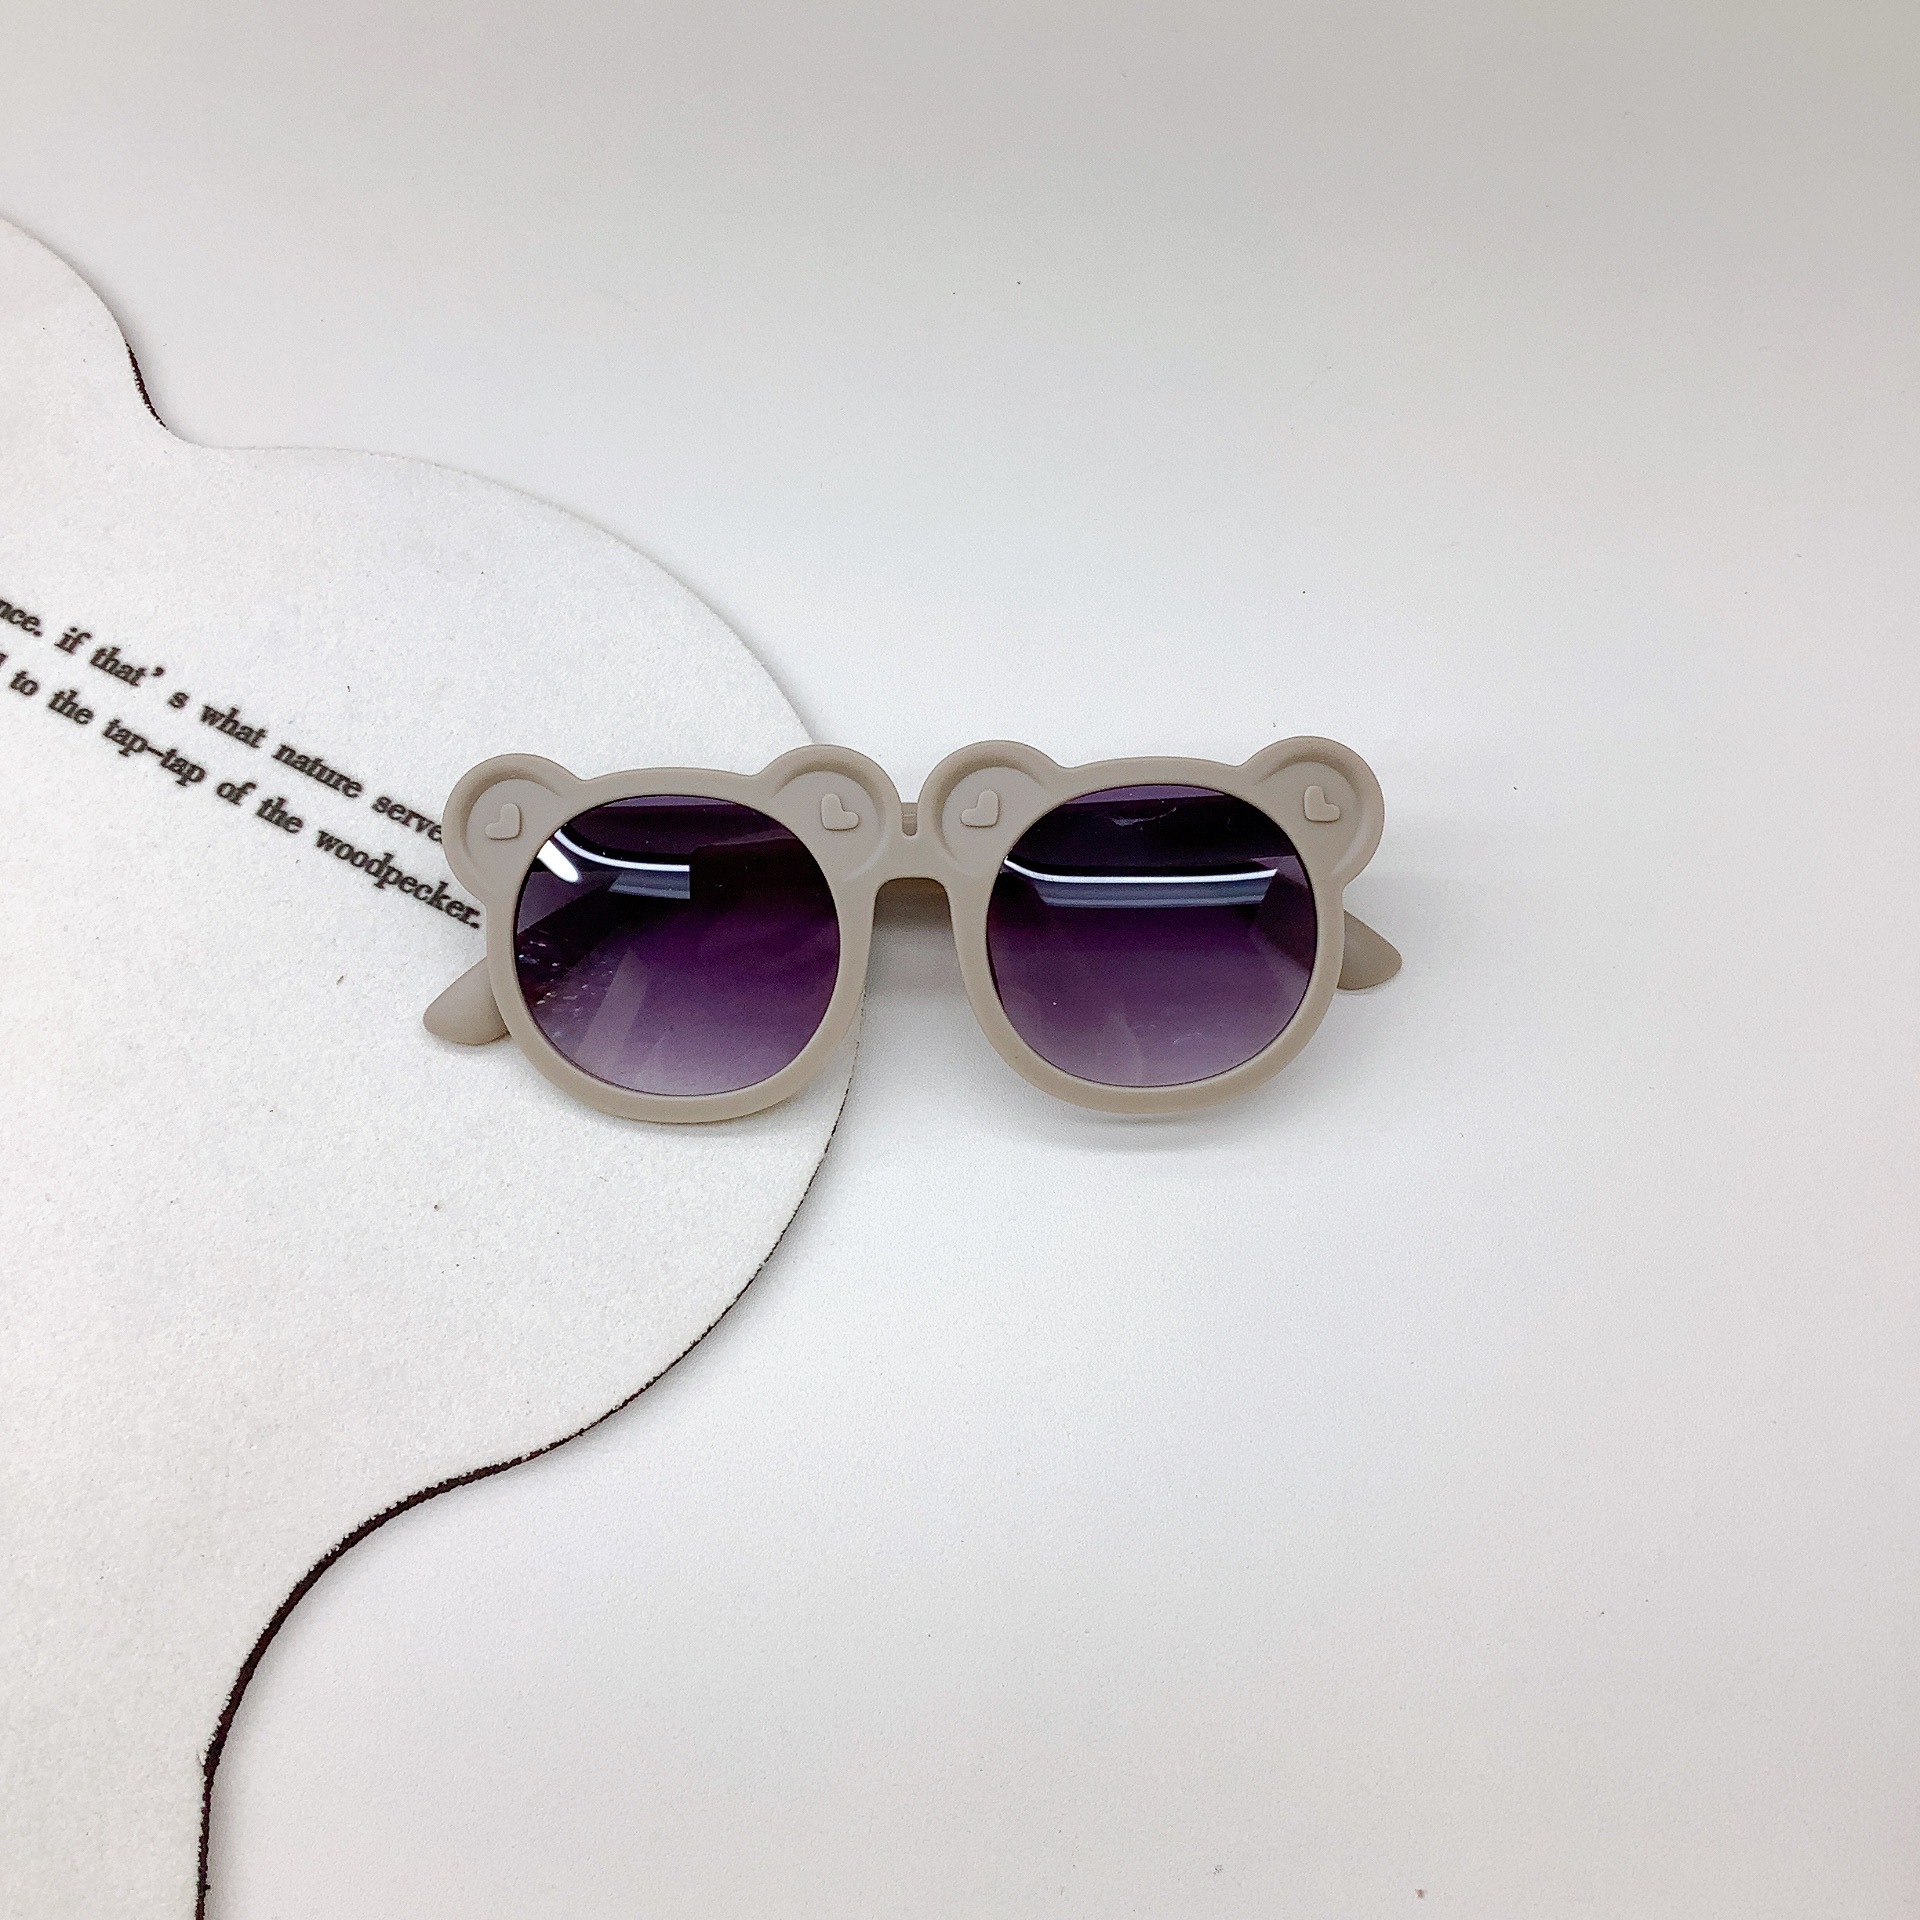 New Kids Sunglasses Love Bear Girls Sunglasses Cute UV Protection Sun Protection Wear Boys Glasses Fashion